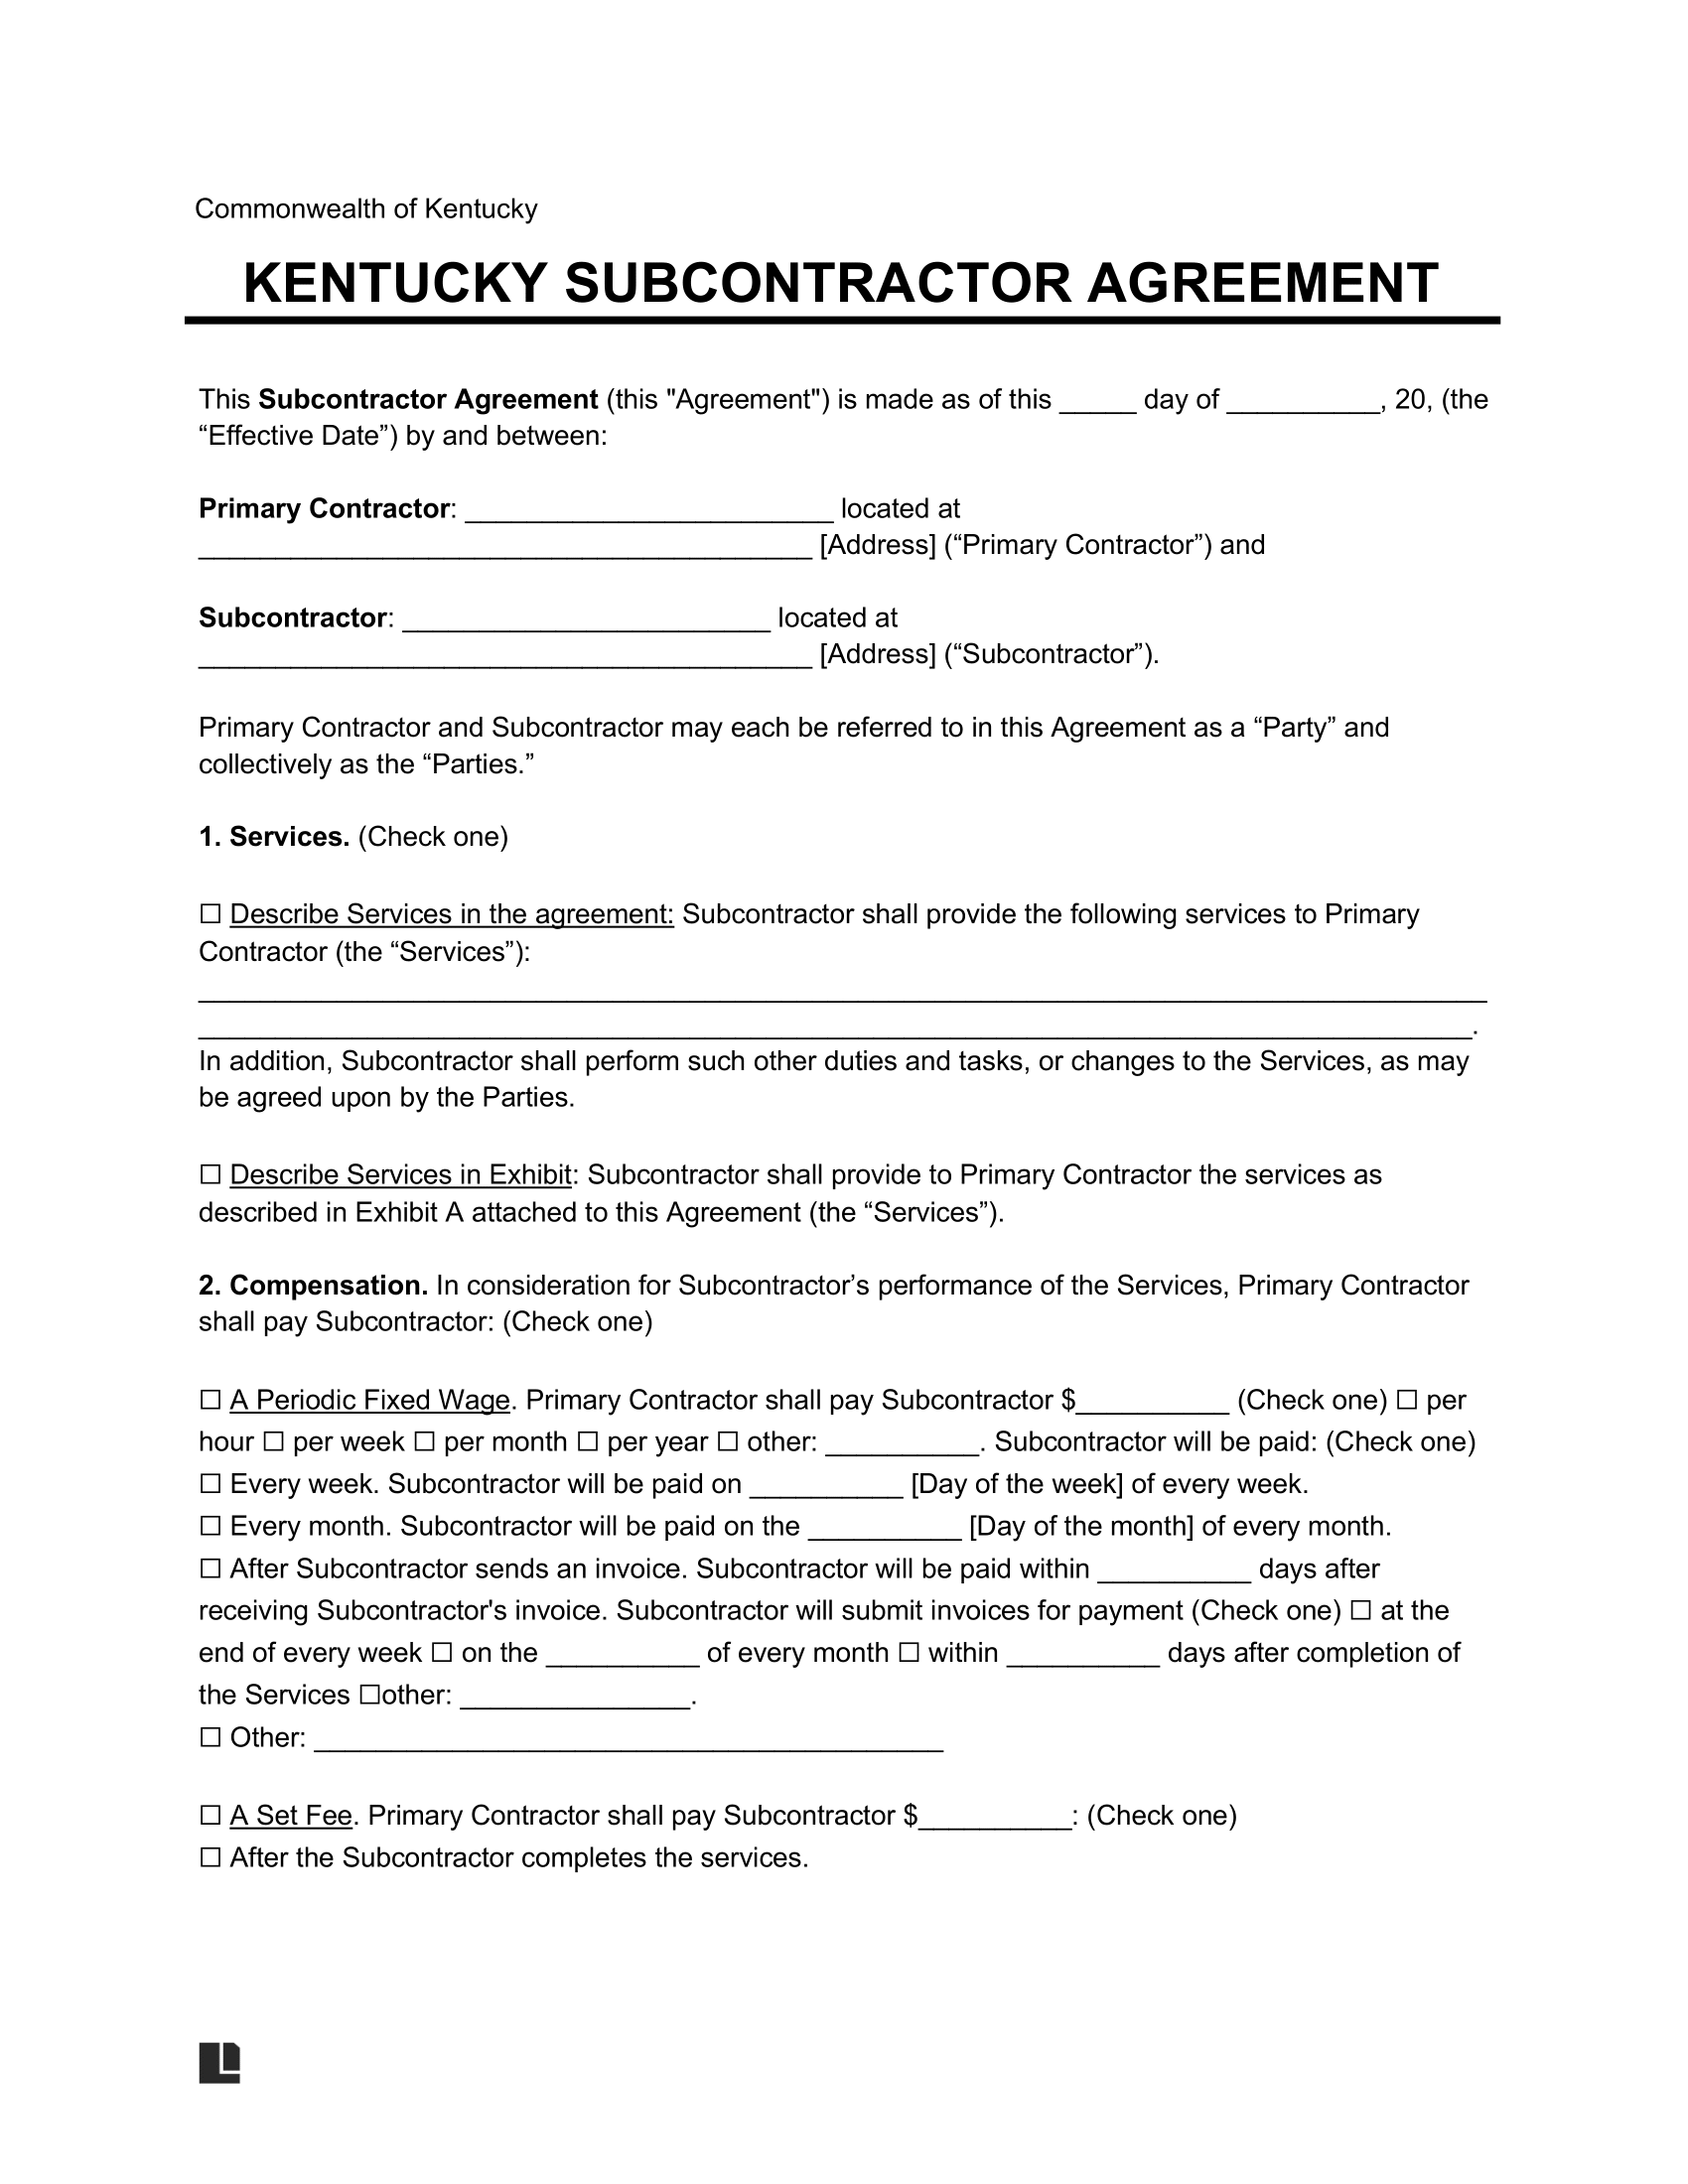 kentucky subcontractor agreement template